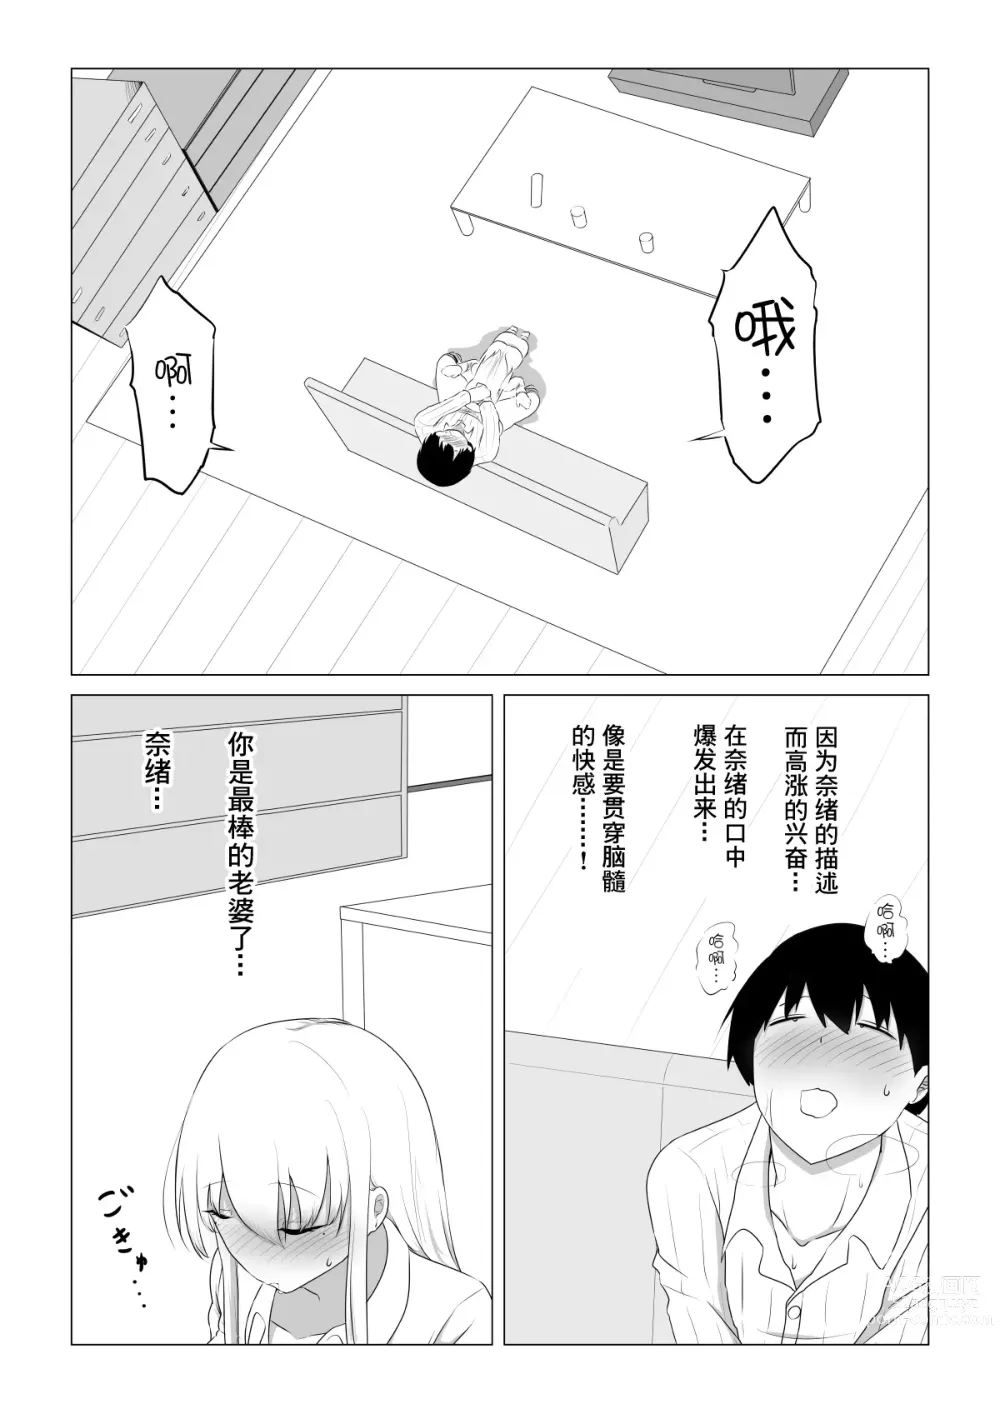 Page 32 of doujinshi 爱妻被绿事件簿